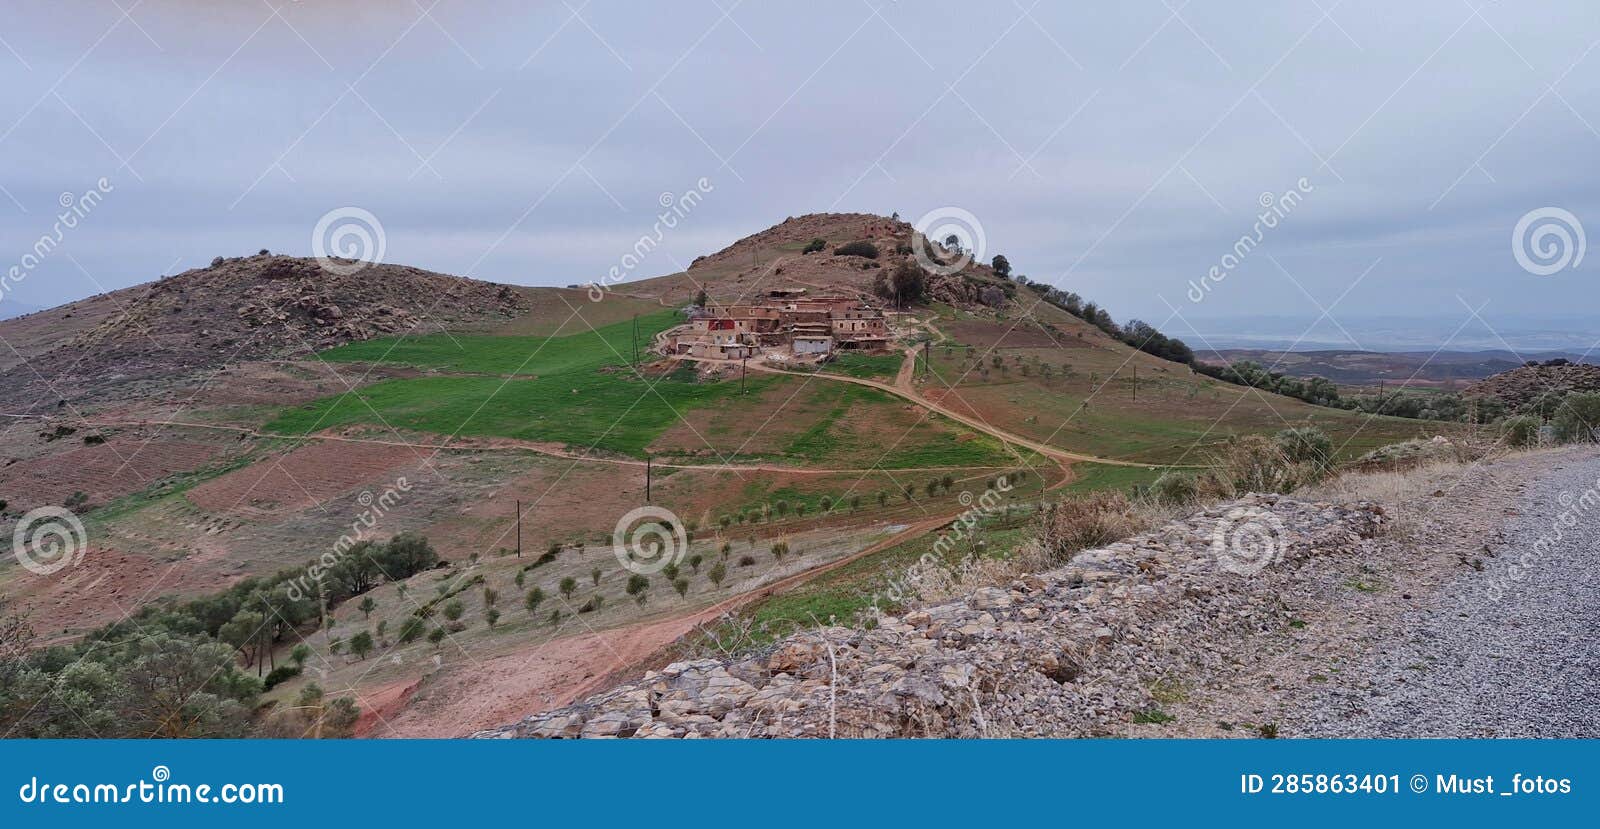 landscape from morocco mountain atlas taza